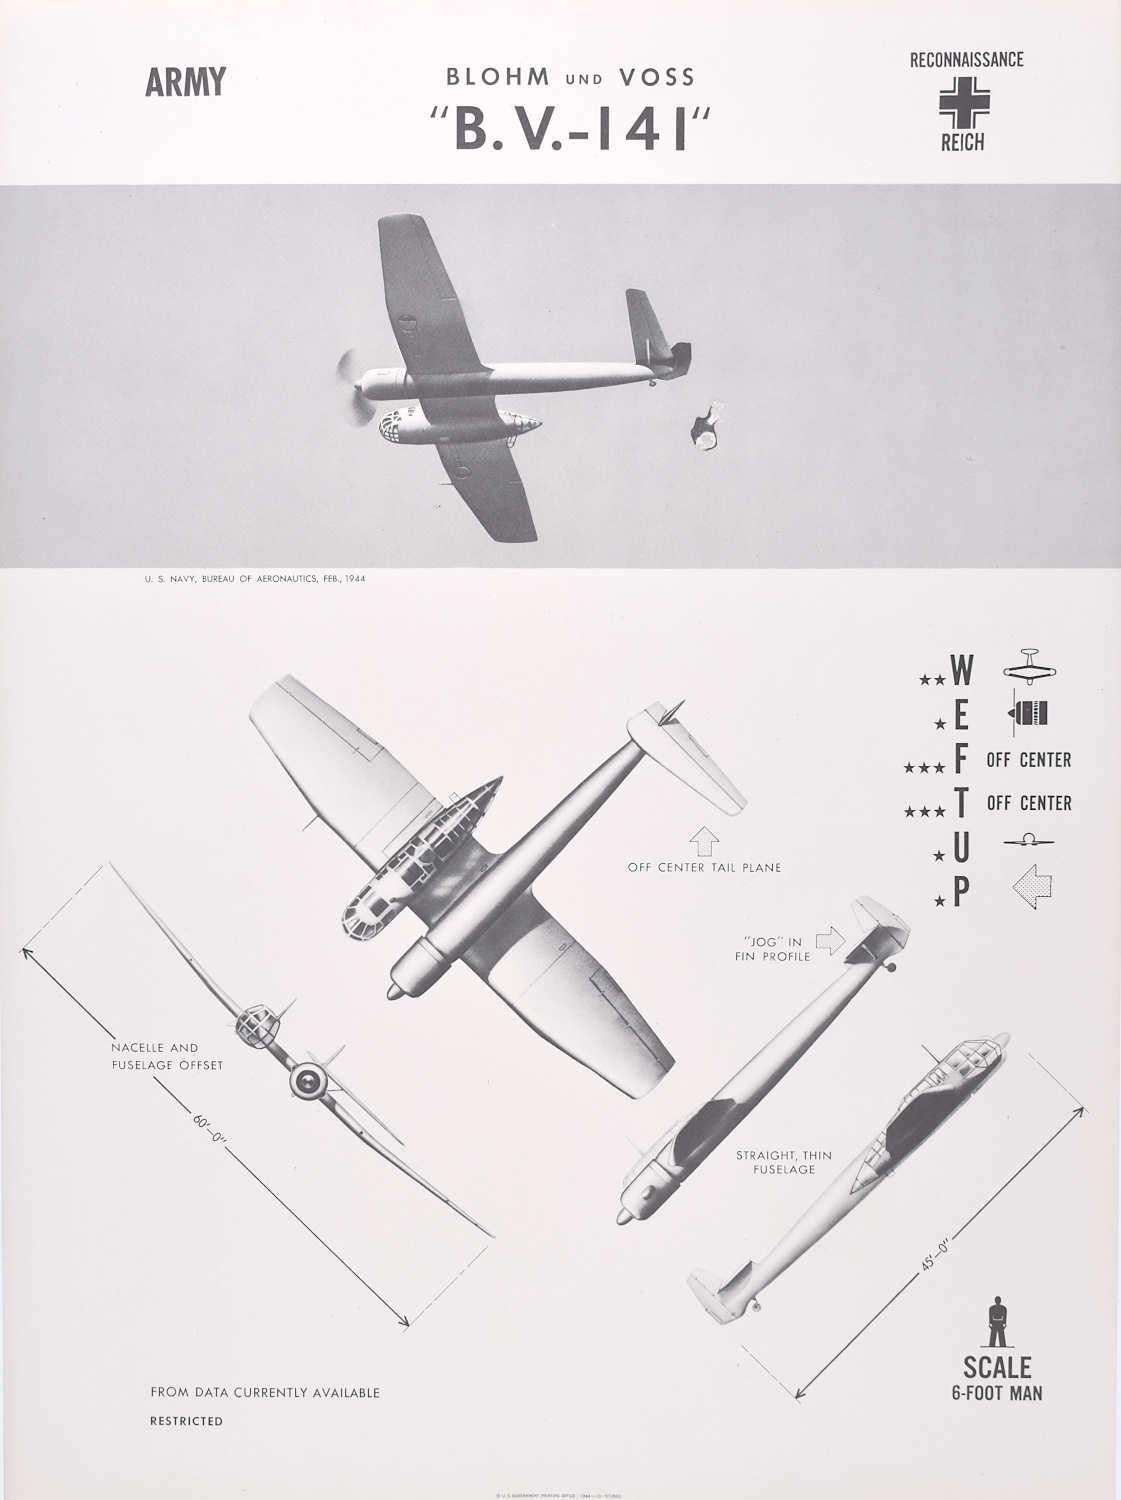 1943 Blohm und Voss "B.V.-141" German survey plane identification poster WW2 - Print by Unknown